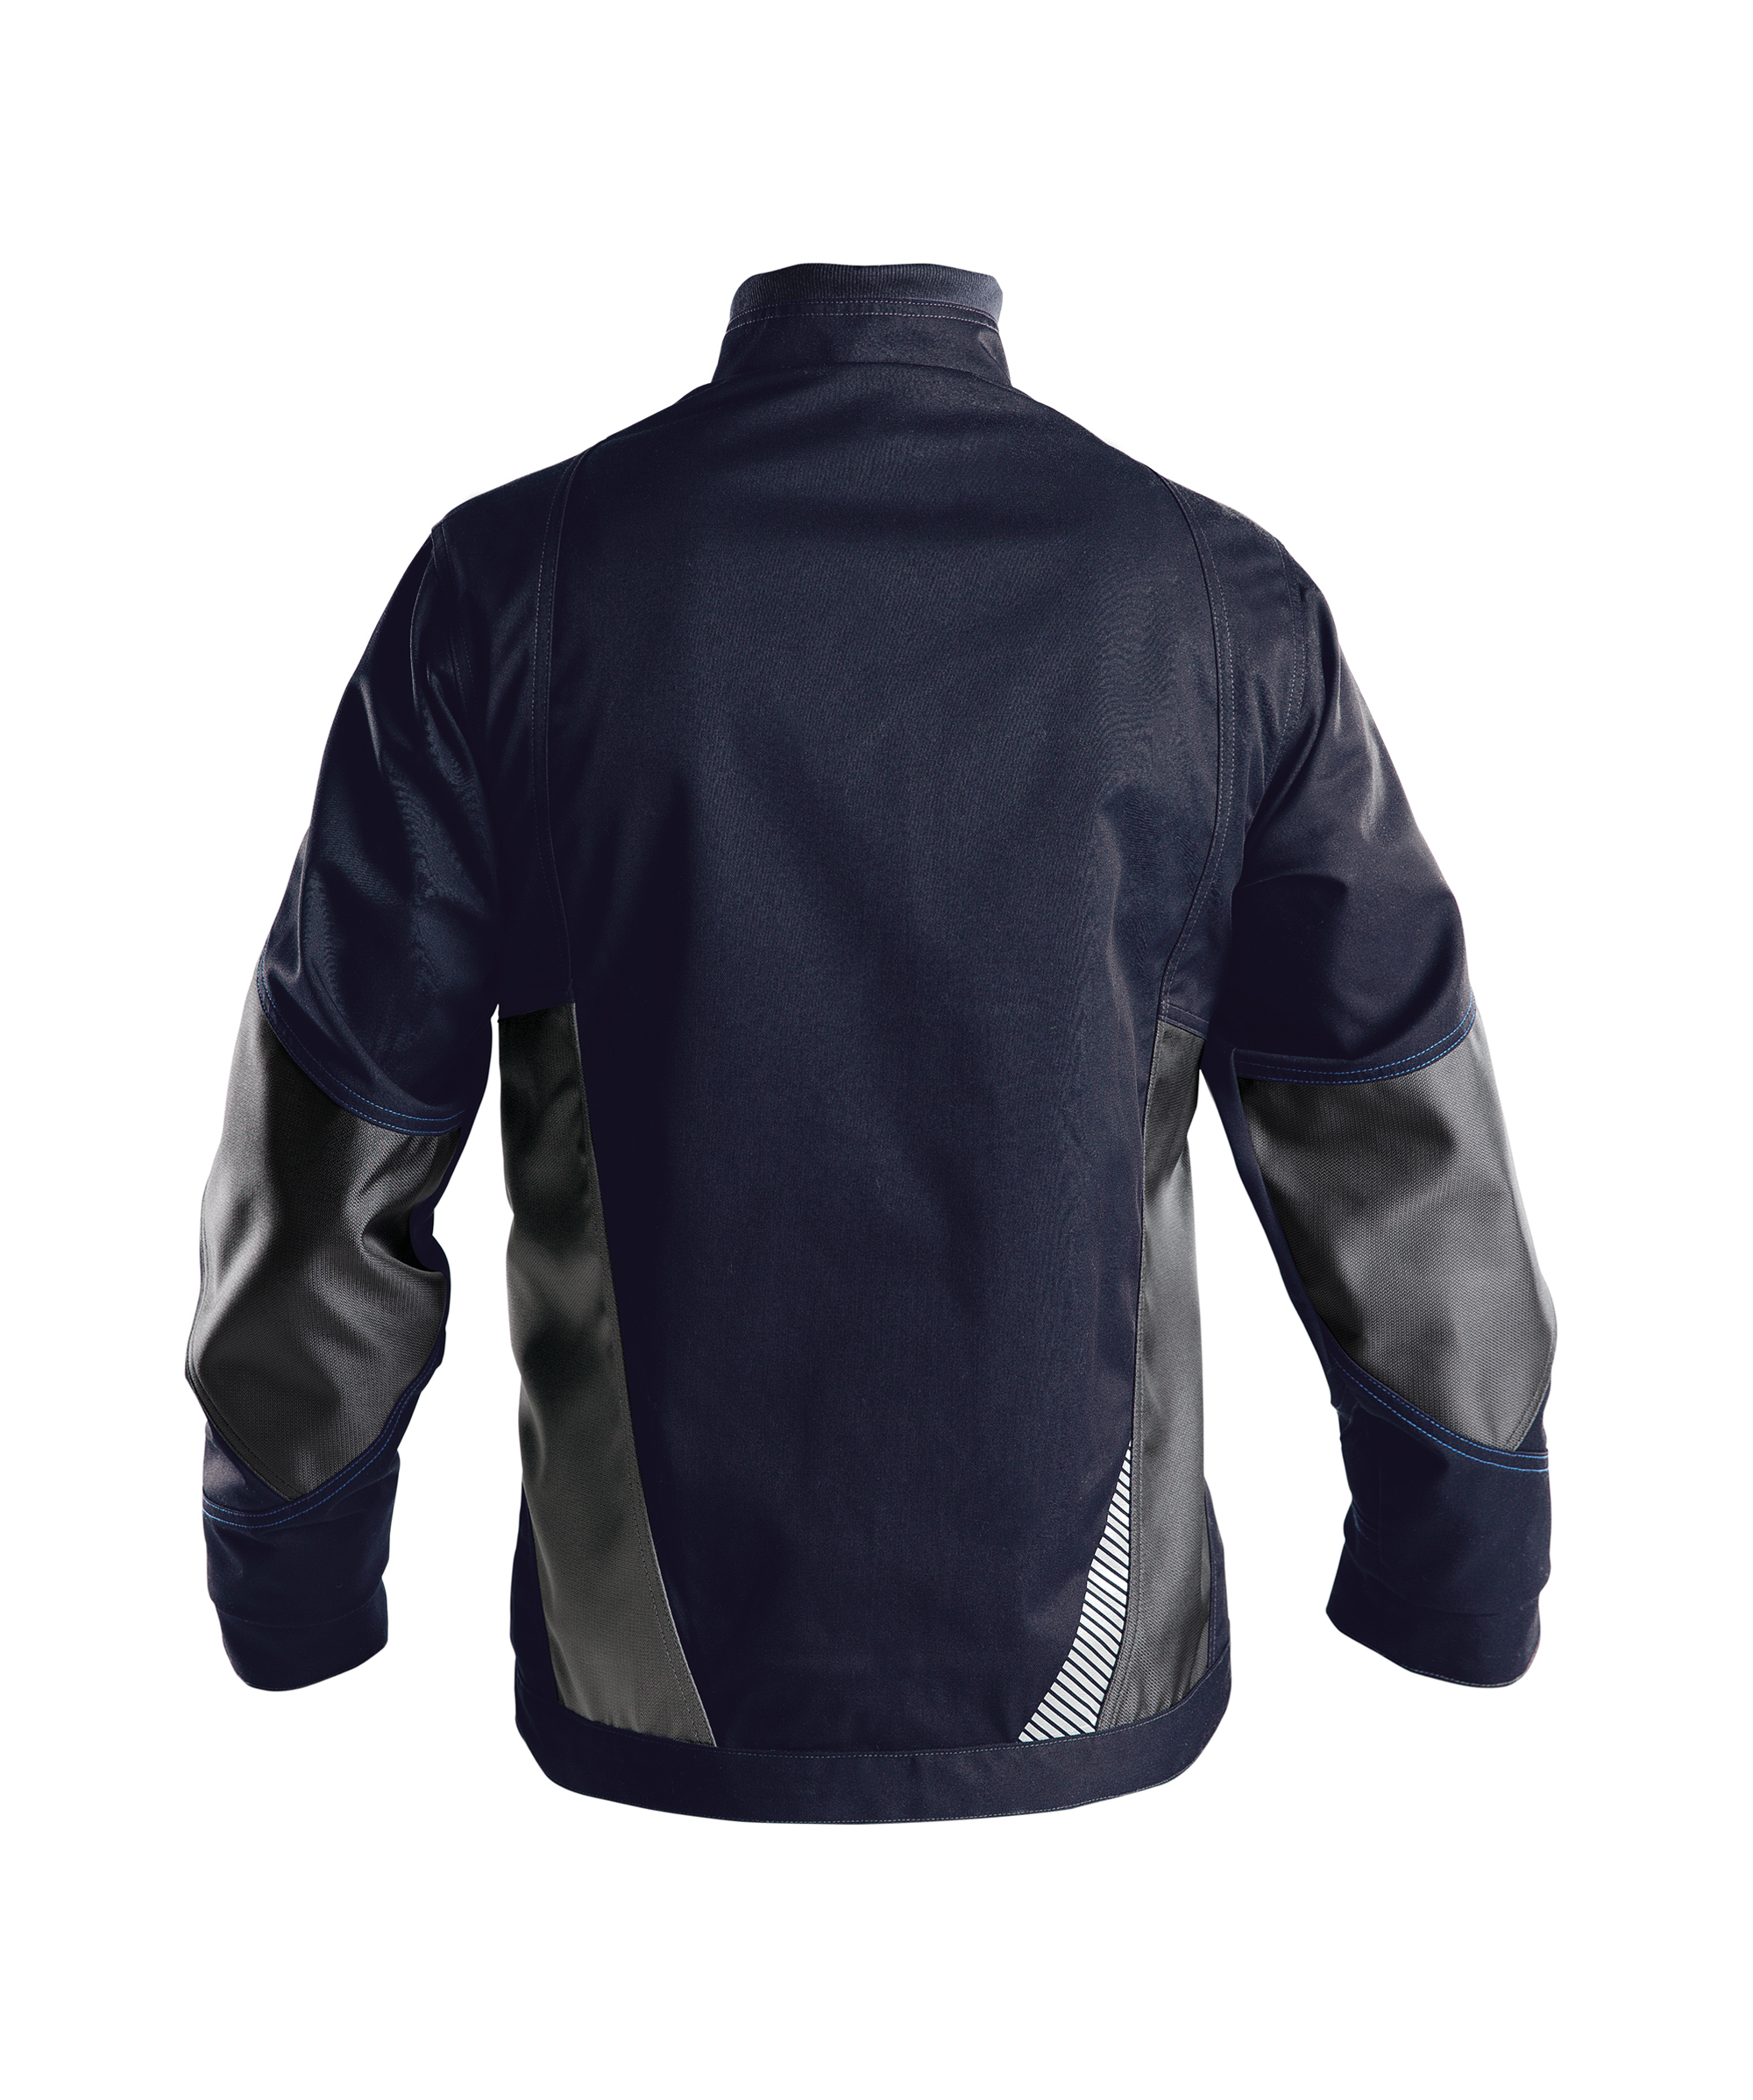 atom_two-tone-work-jacket_midnight-blue-anthracite-grey_back.jpg